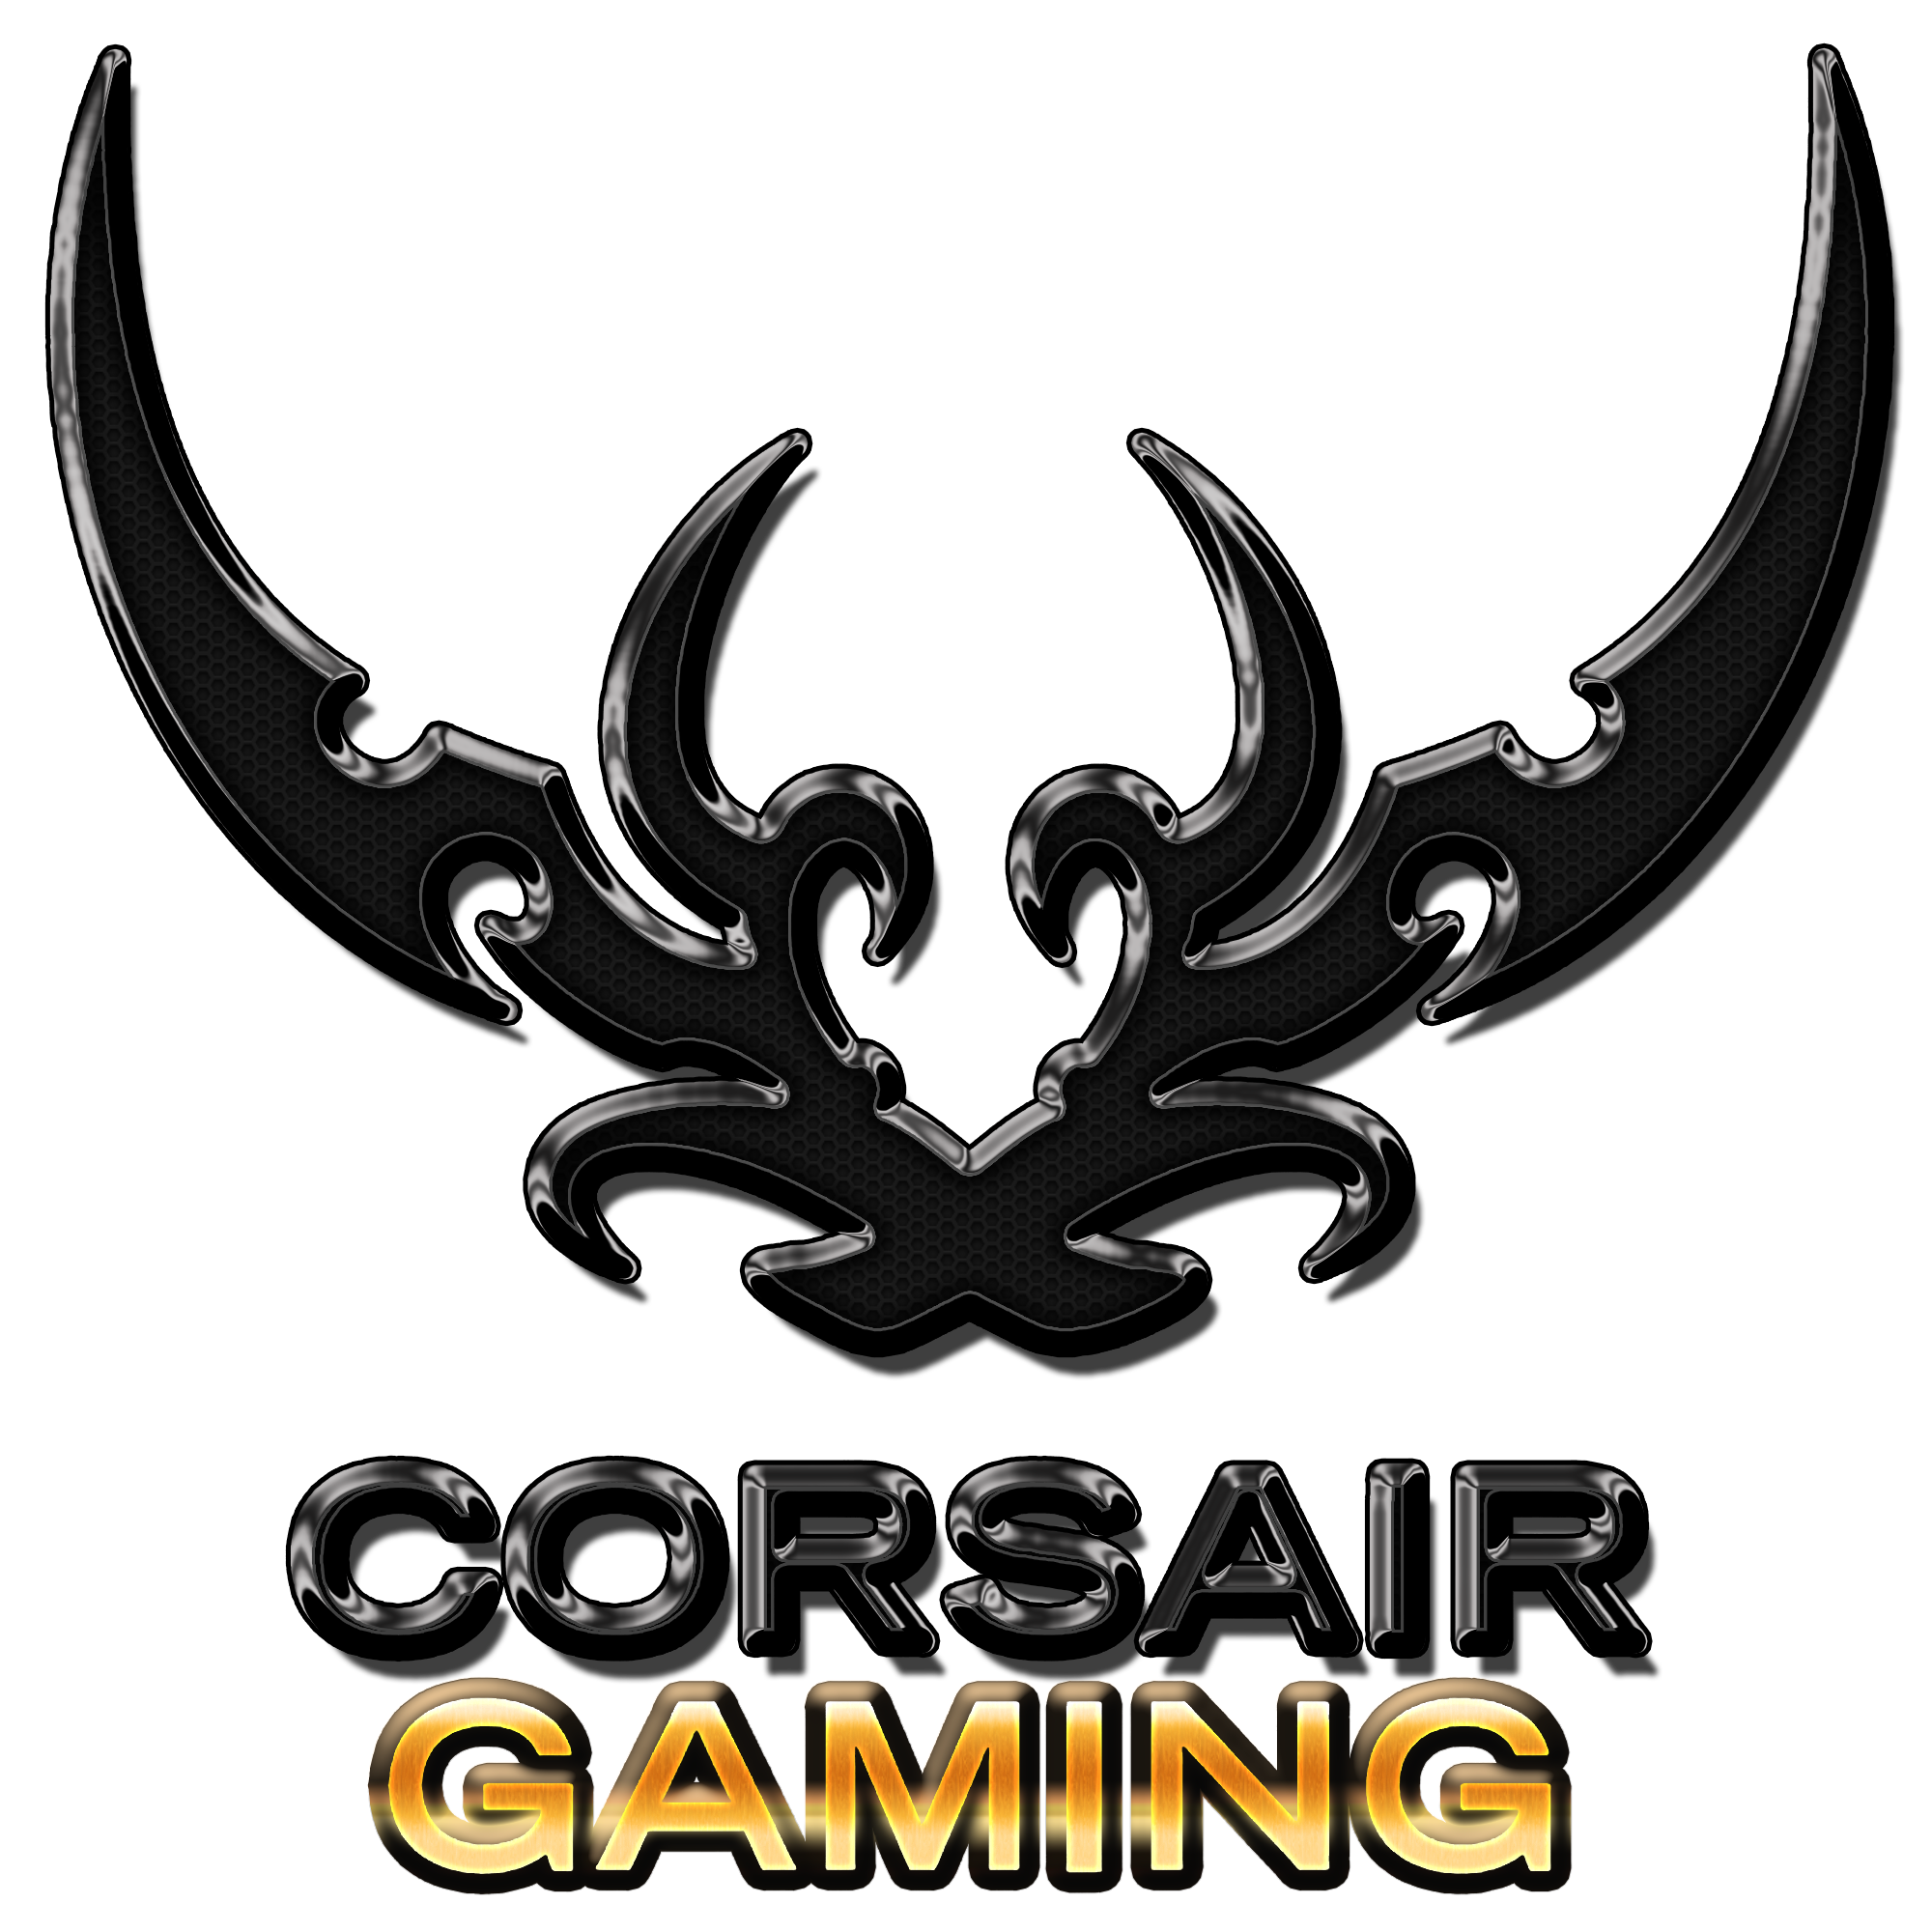 Corsair Gaming Logo by llexandro on DeviantArt